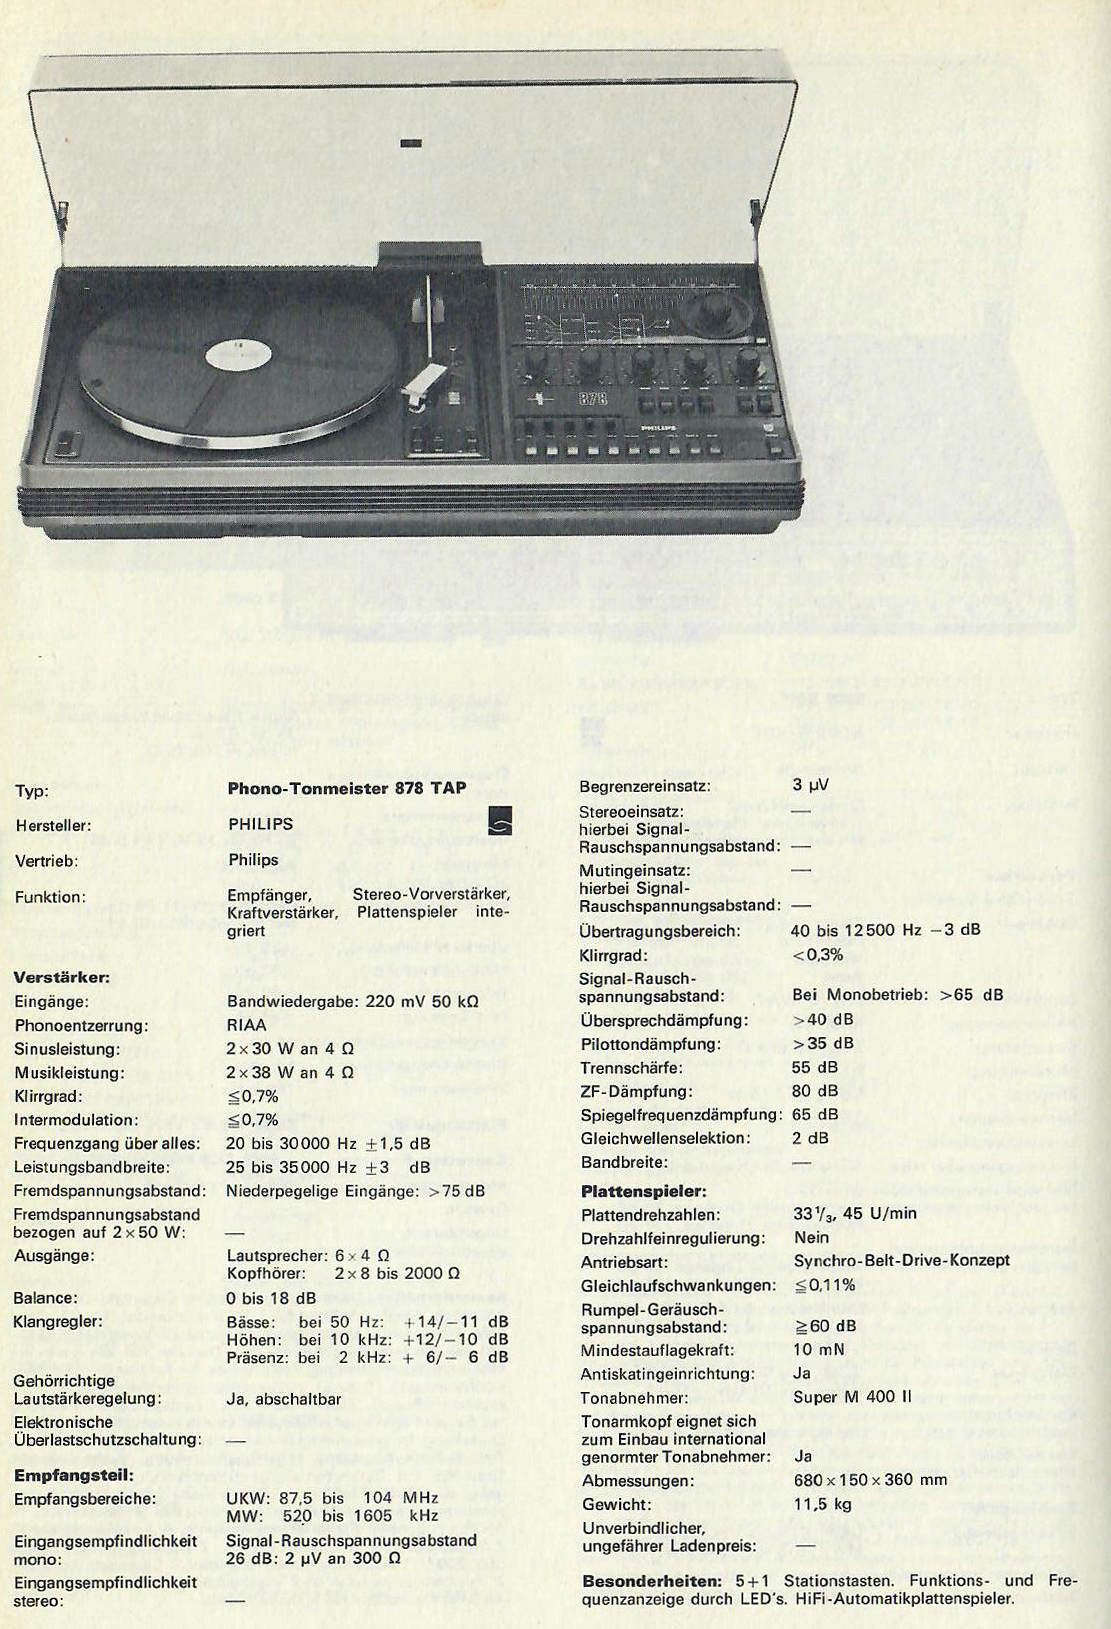 Philips Tonmeister 878-Daten.jpg